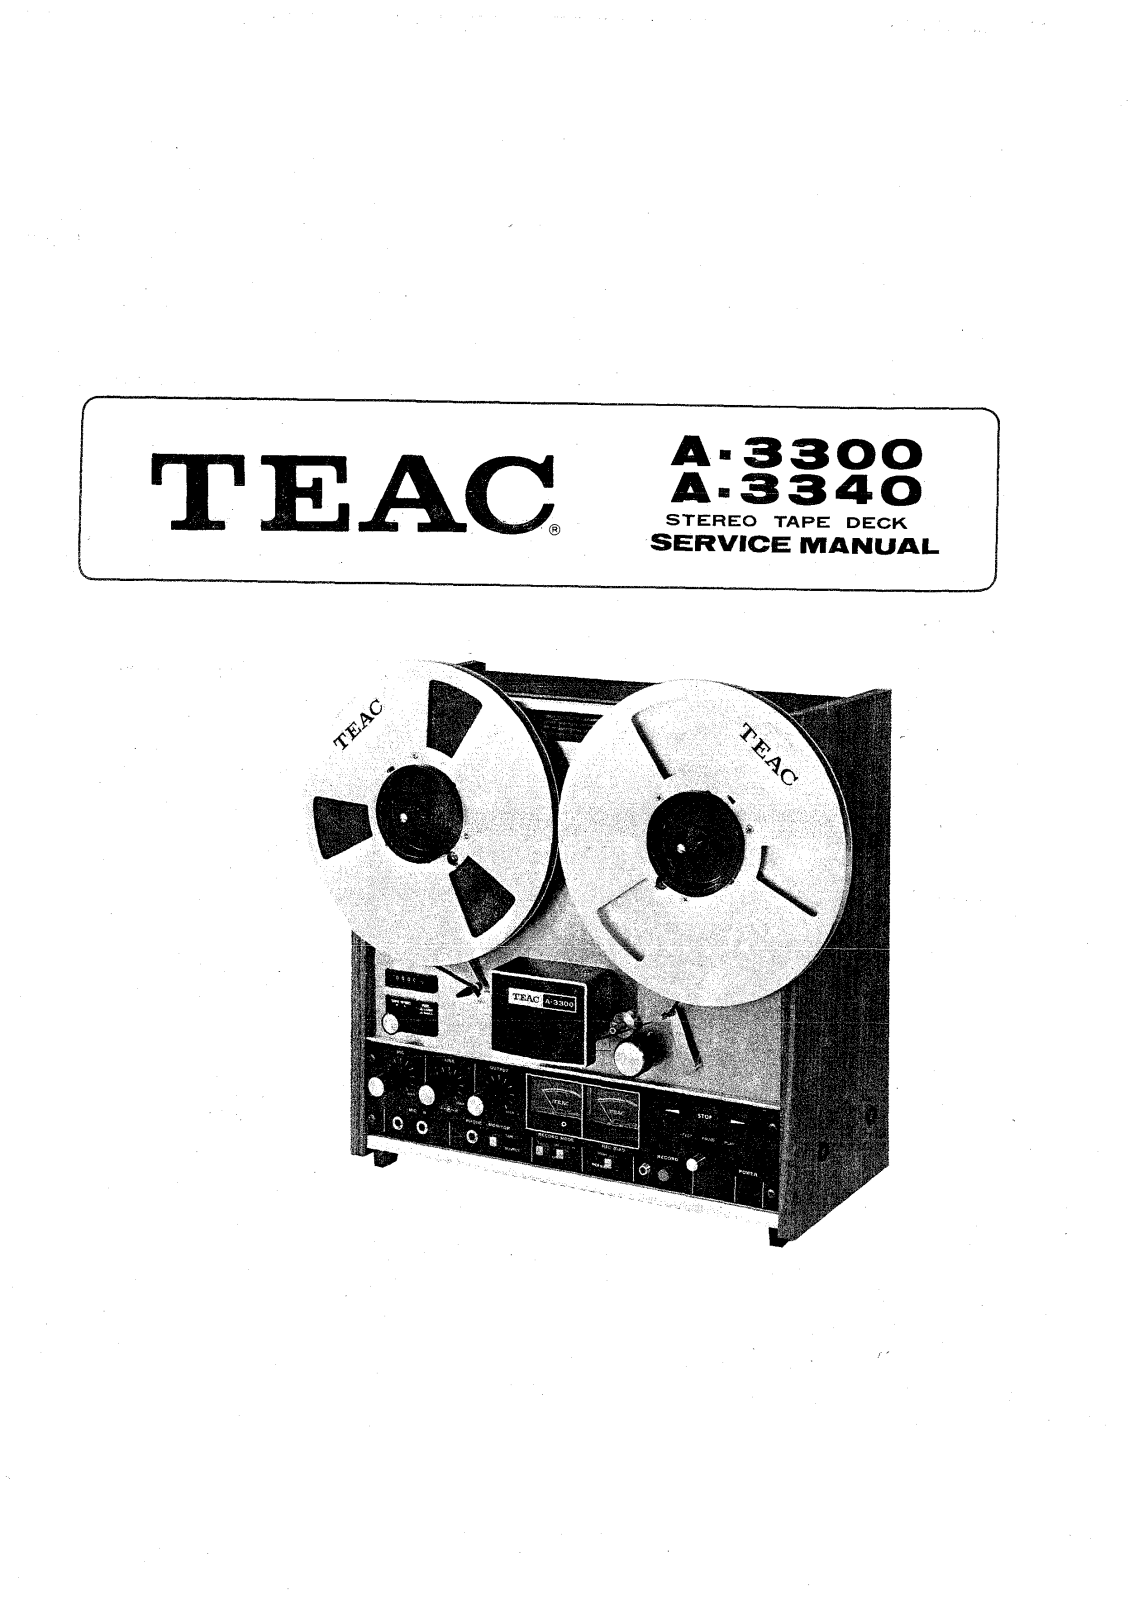 TEAC A-3300 Service manual